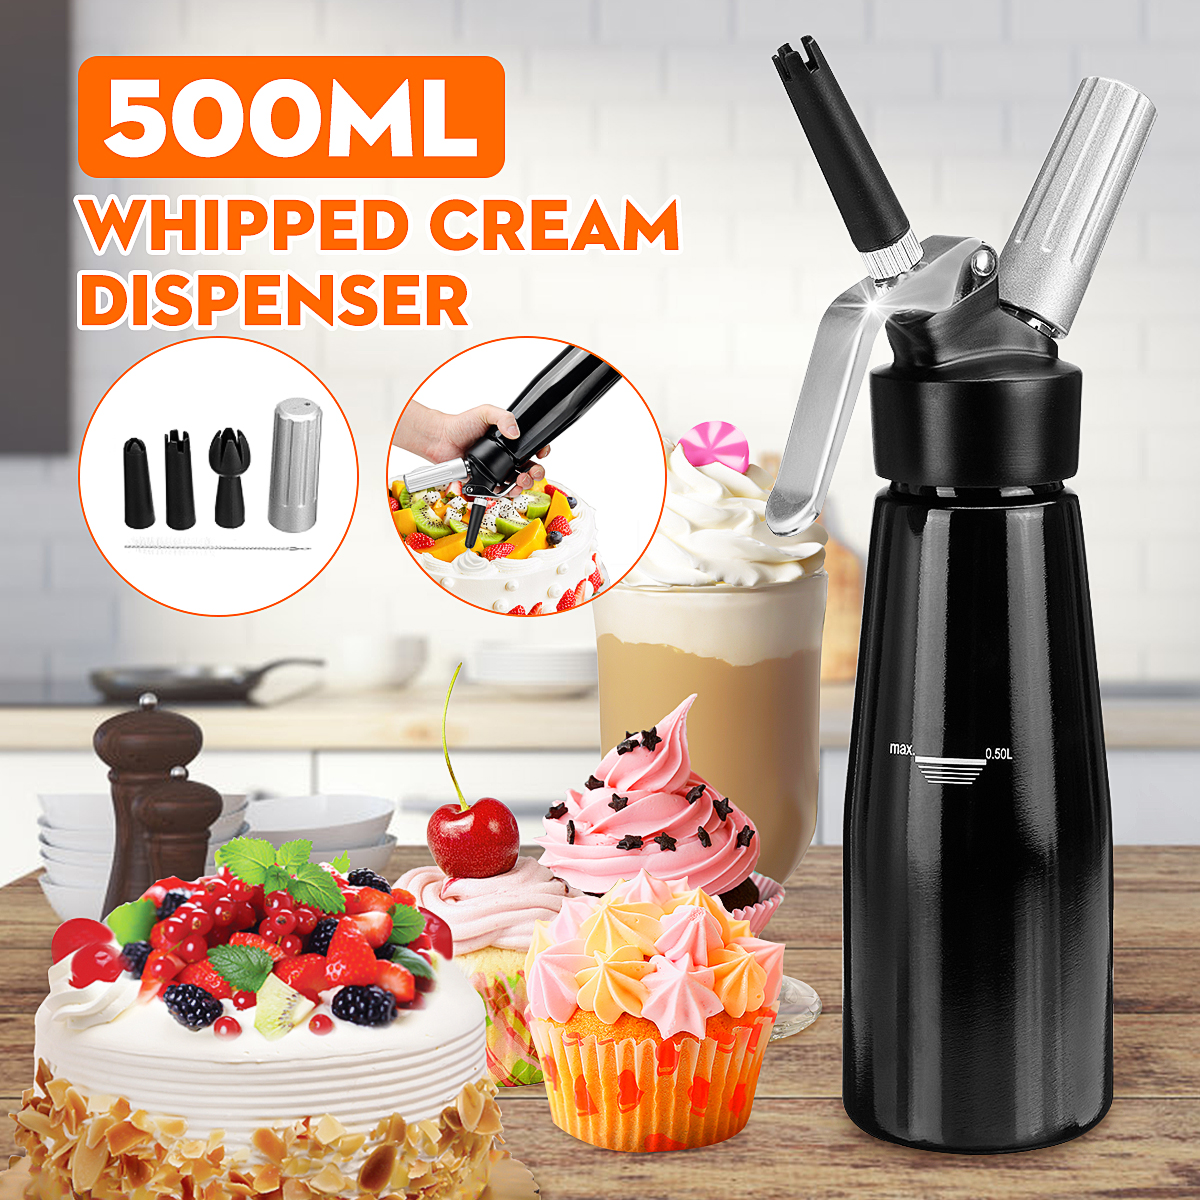 500ml-Whipped-Cream-Dispenser-Whipper-Cracker-Attachen-Nozzles-Desserts-Maker-Kitchen-Bakeware-Tool-1837559-1